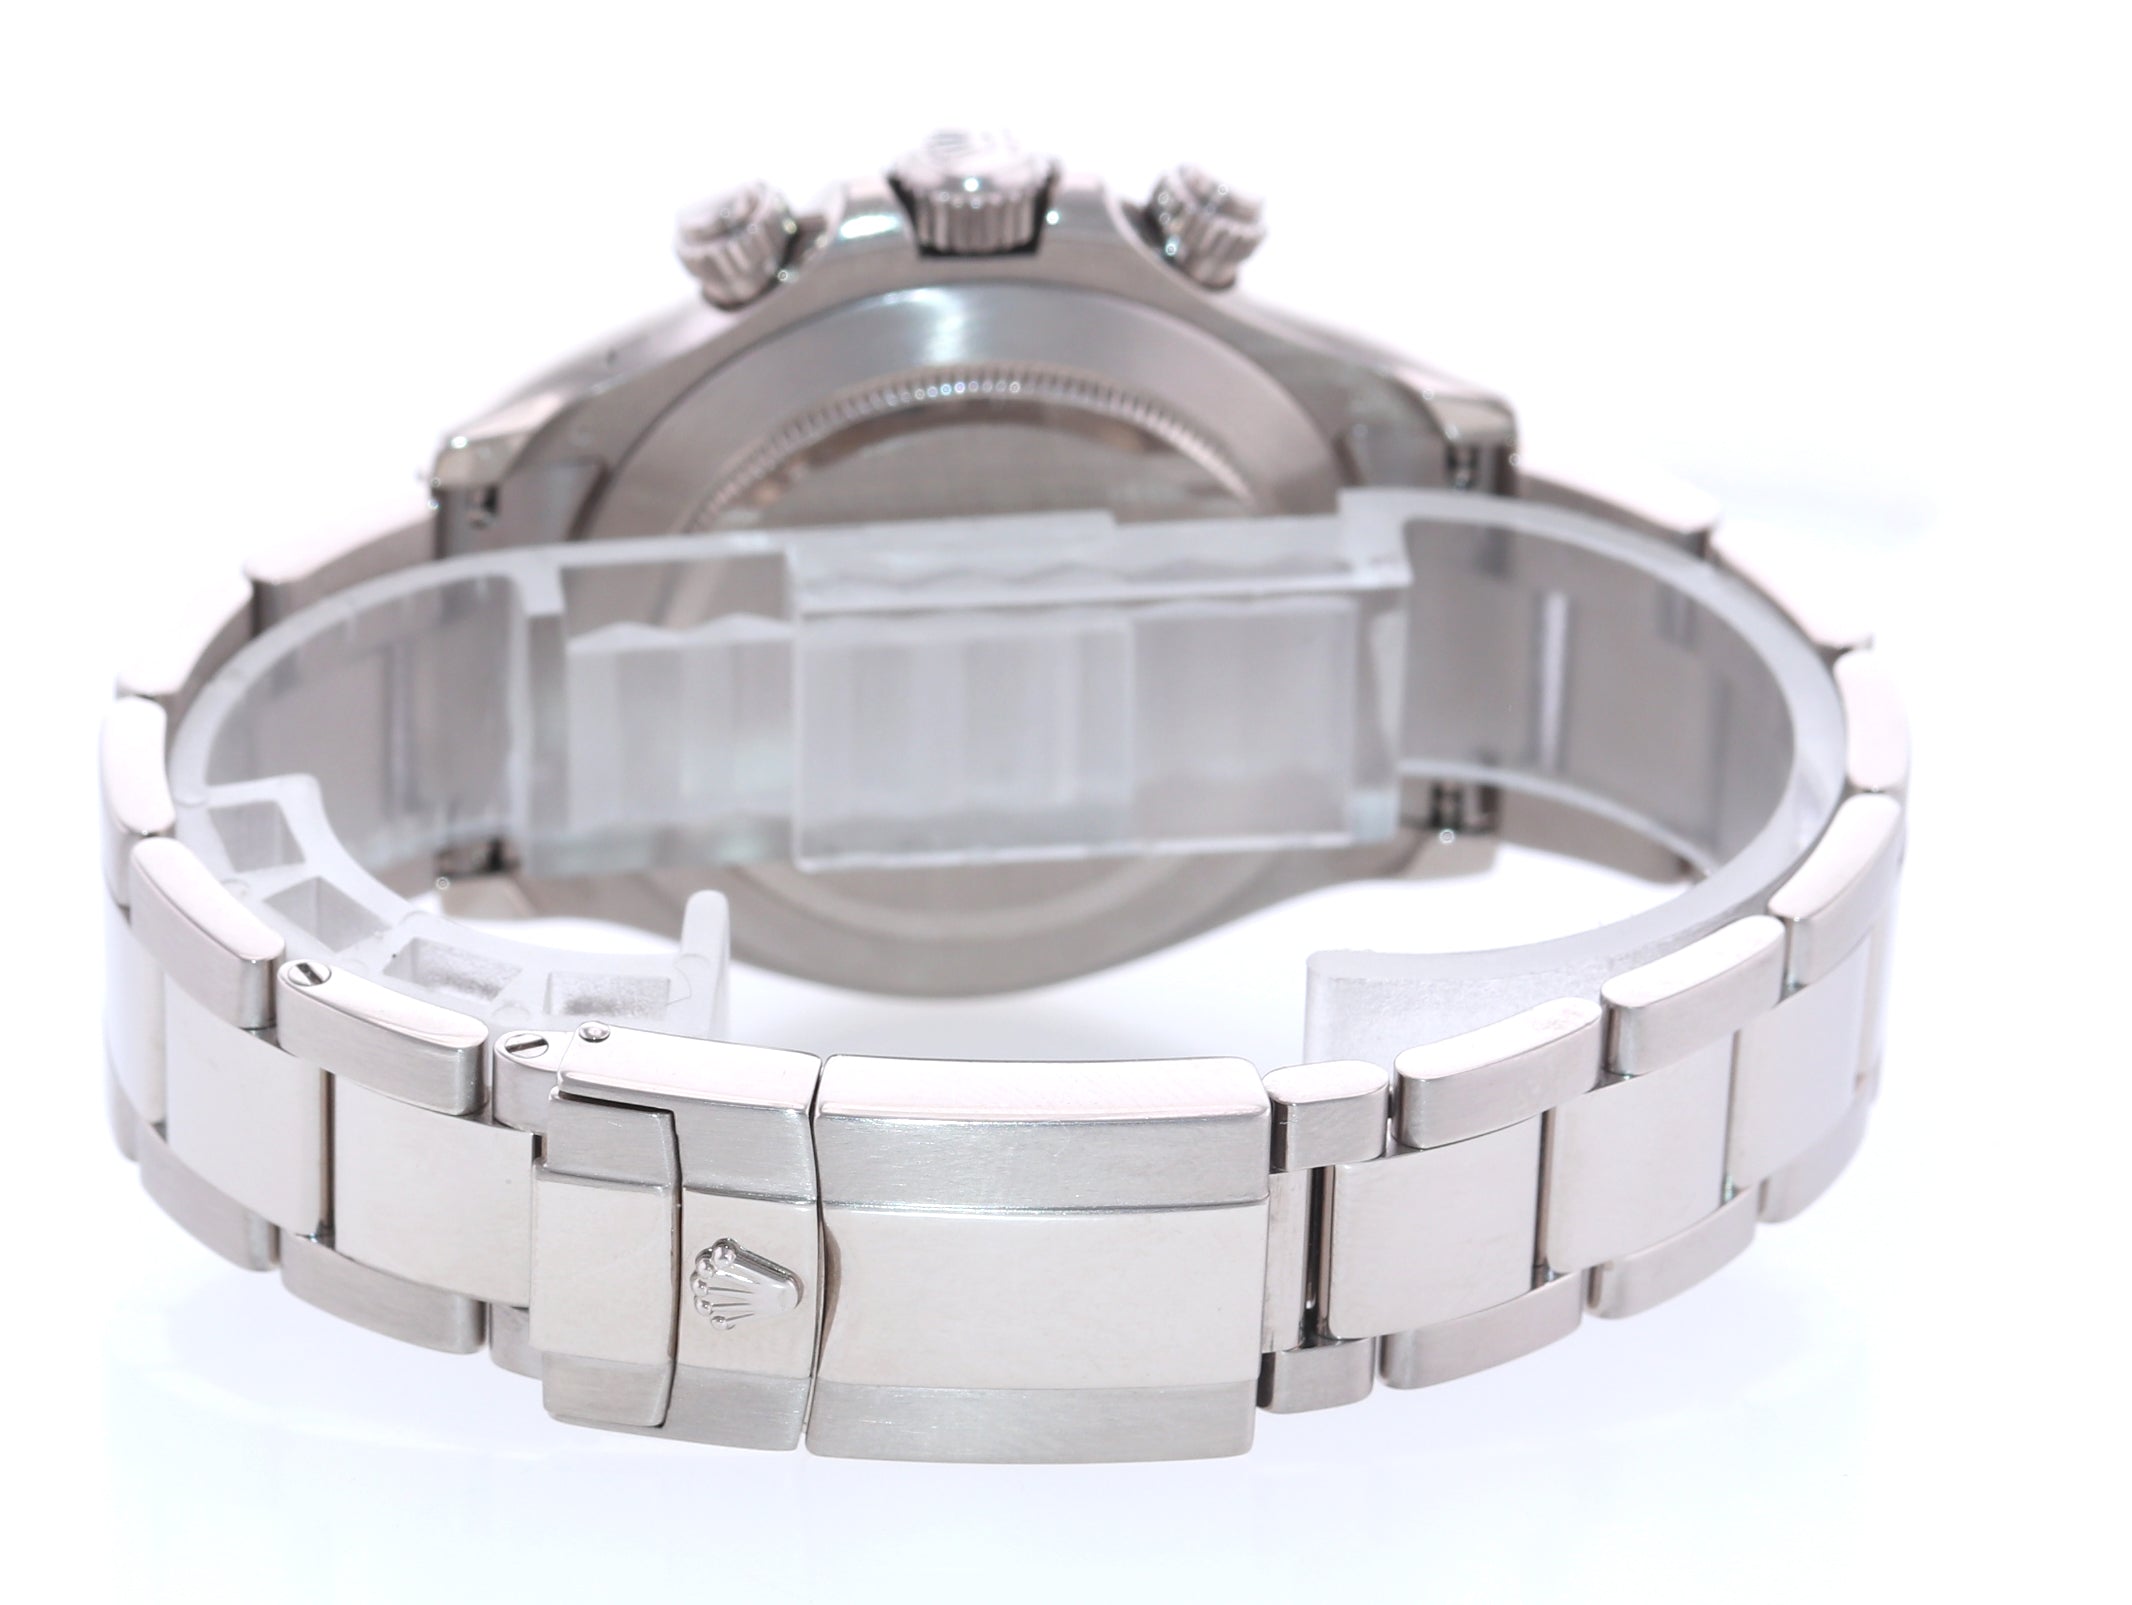 Mint Rolex Daytona Black Racing Dial 116509 18k White Gold Chrono Watch Box